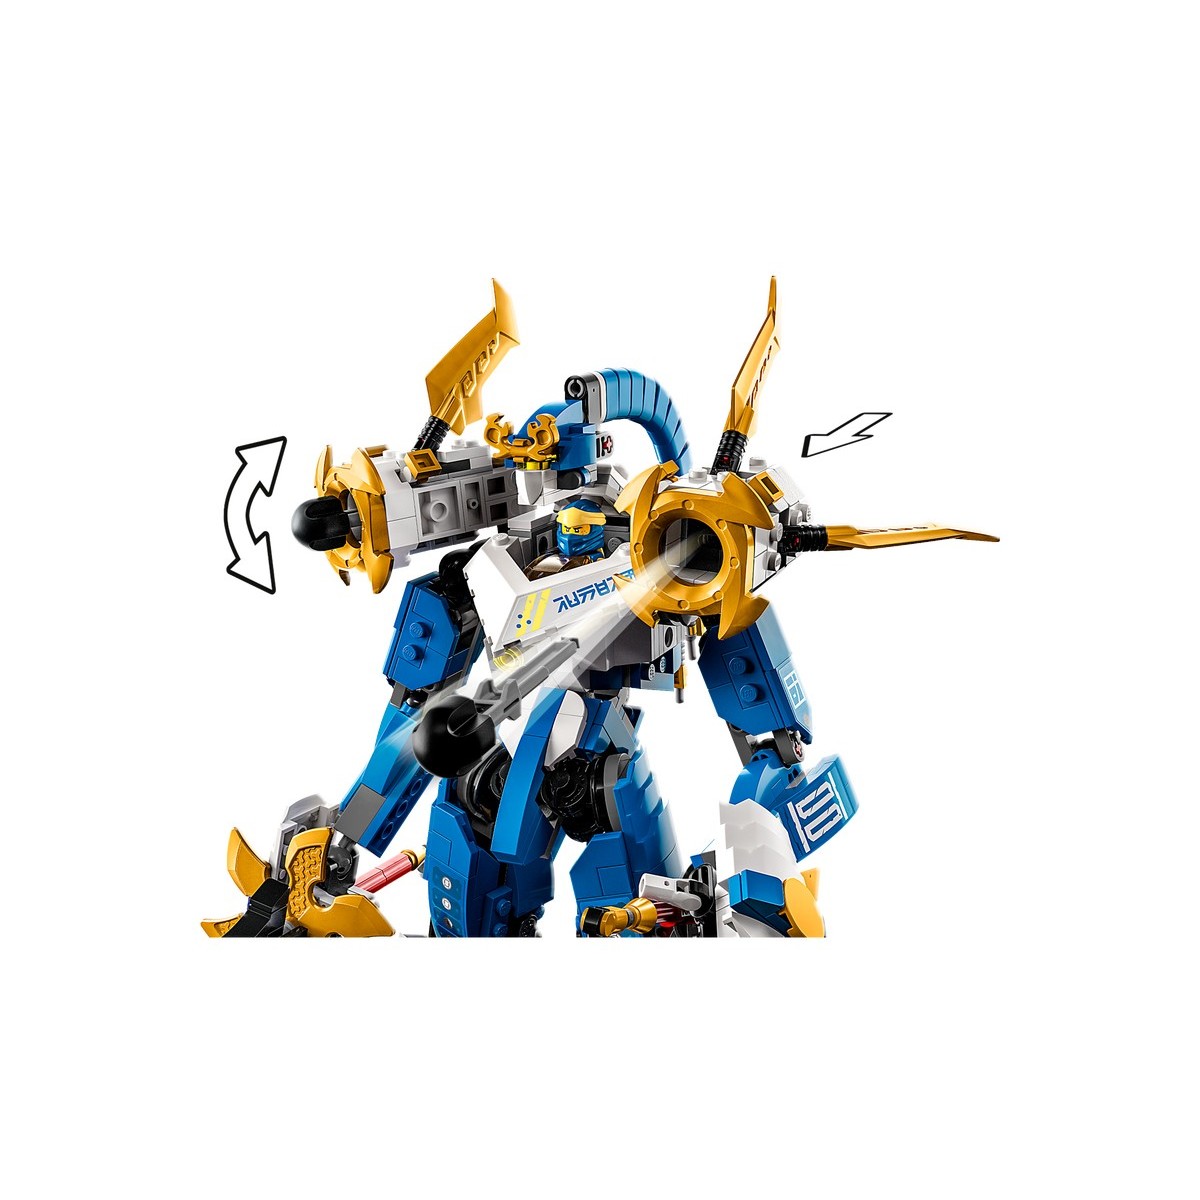 LEGO NINJAGO JAYOV TITANSKY ROBOT /71785/